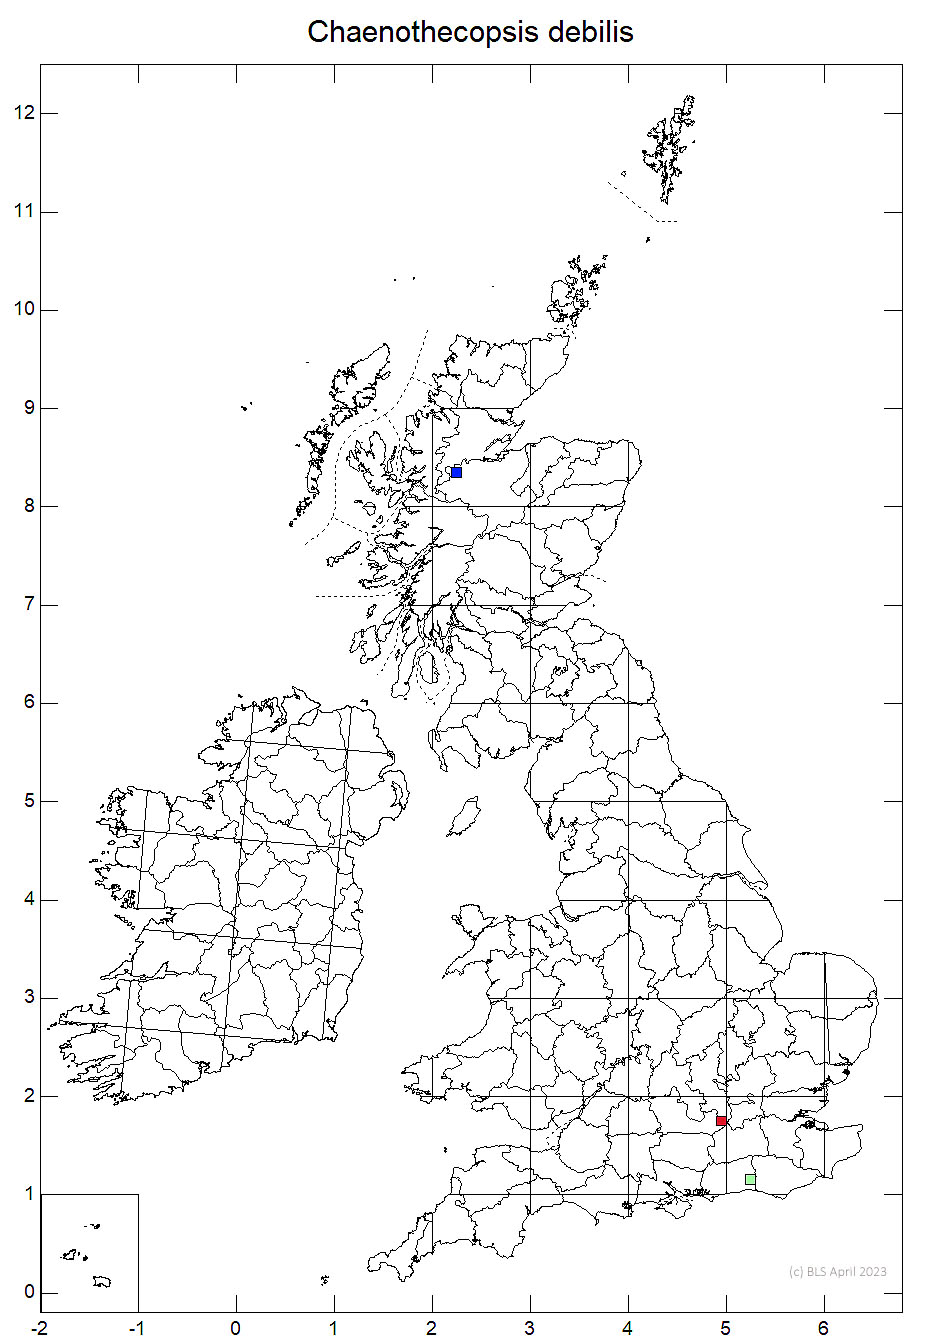 Chaenothecopsis debilis 10km sq distribution map